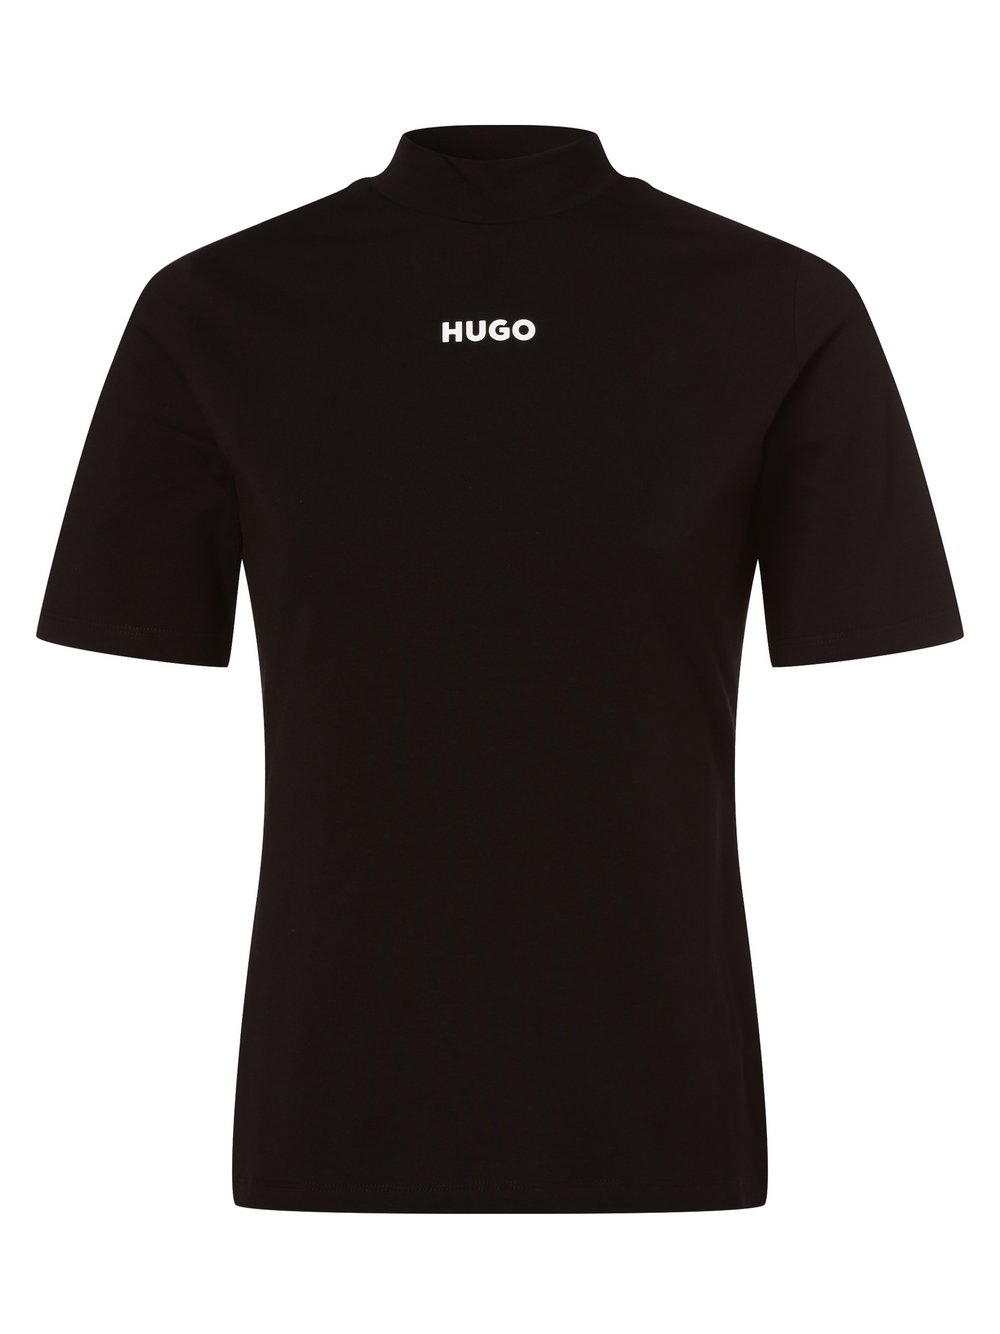 HUGO - T-shirt damski – Dendaya, czarny